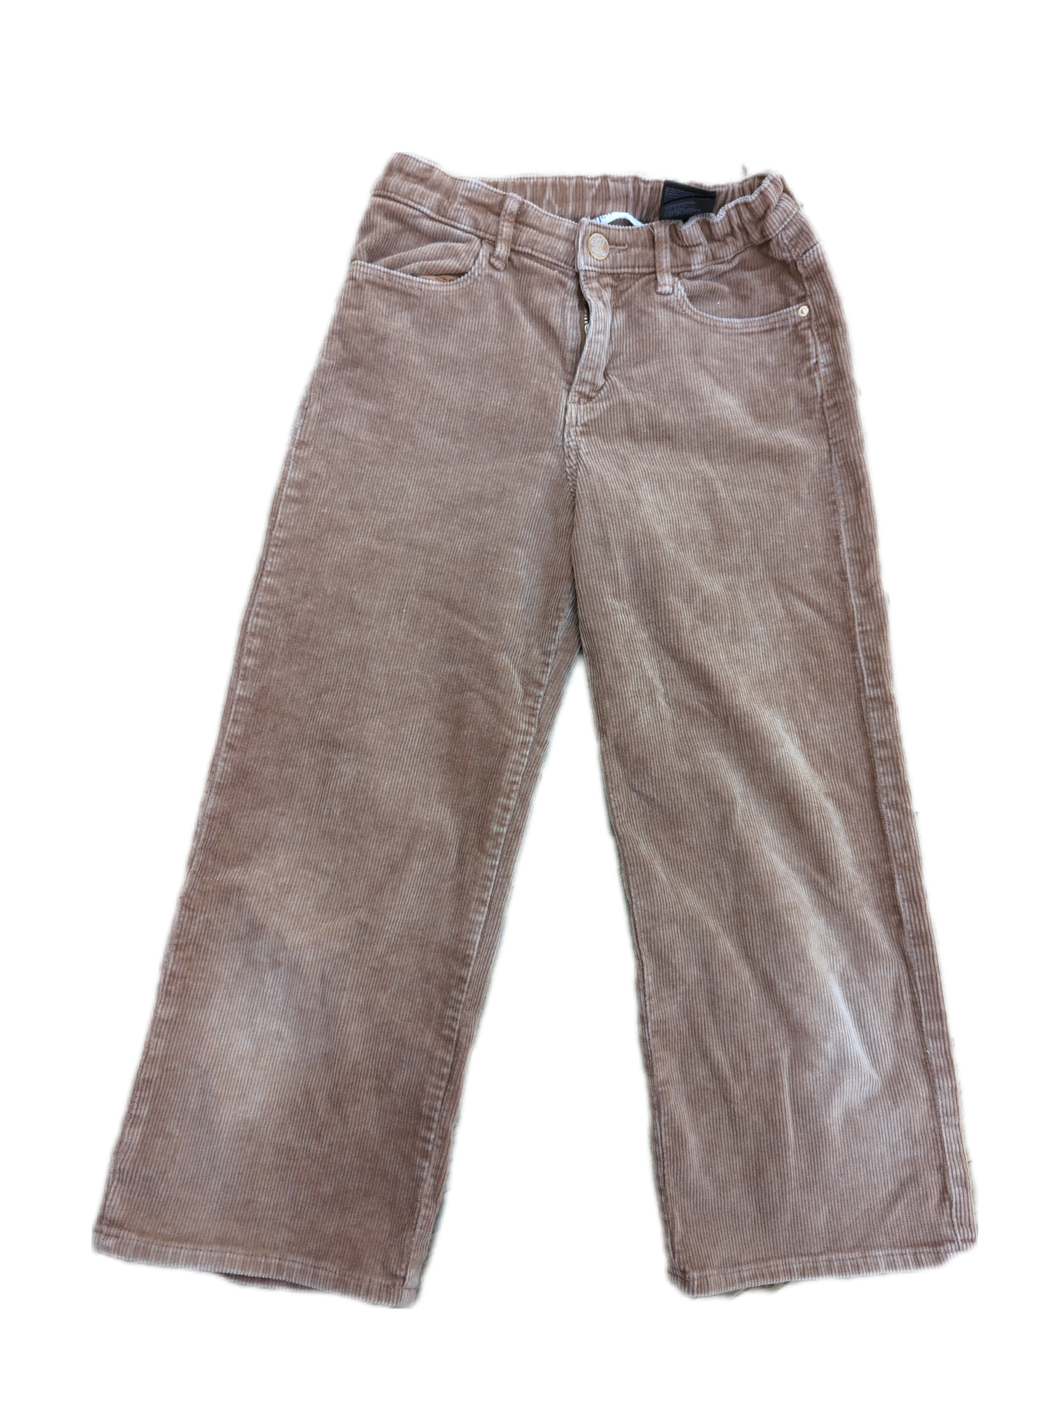 Pantalon cheville corduroy 9ans - 10ans H&M